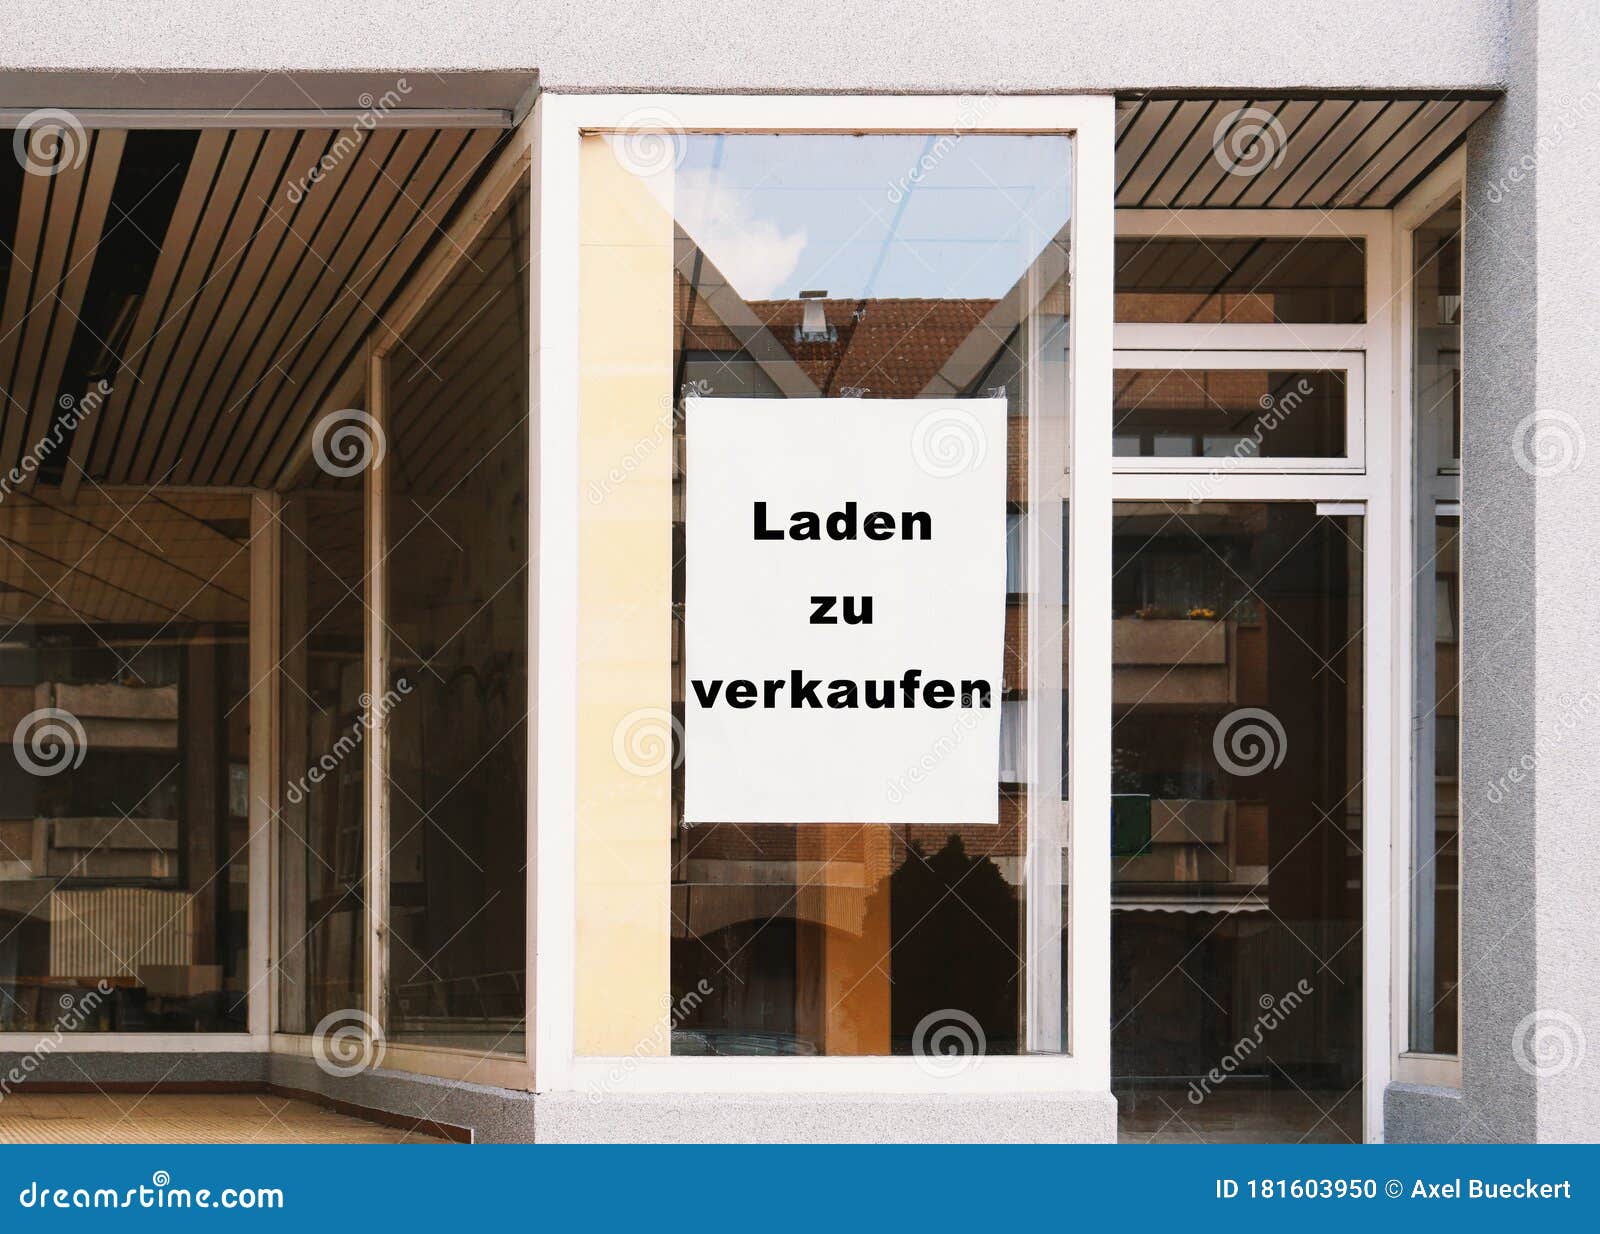 laden zu verkaufen - translates as store for sale - german sign